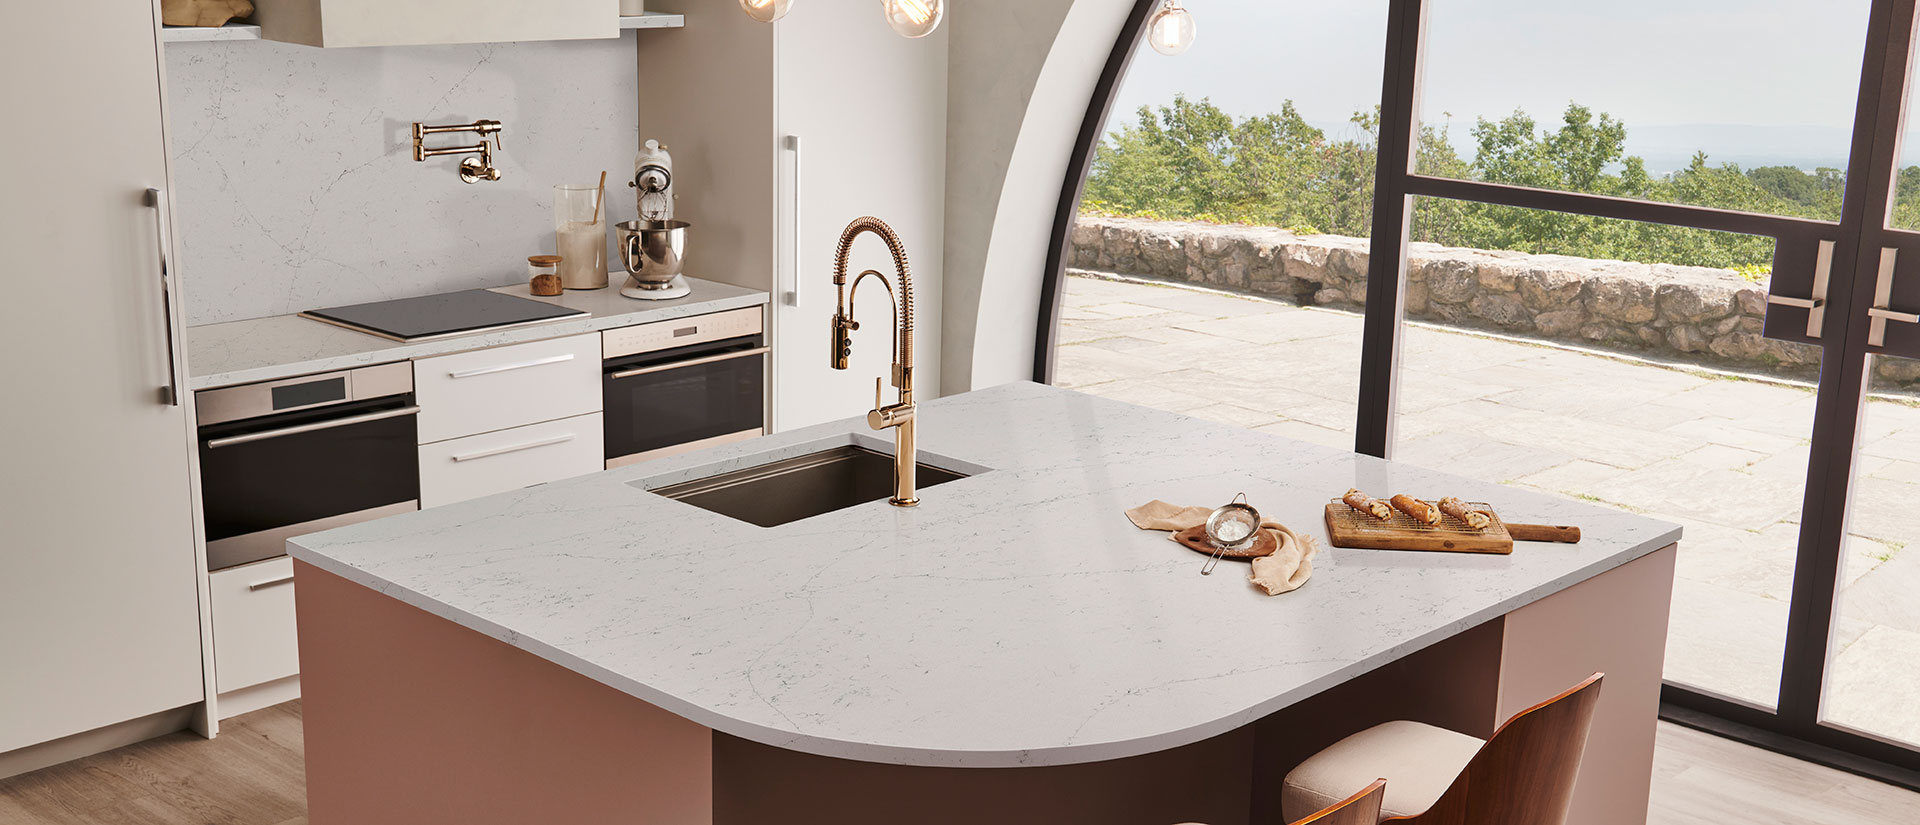 Calacatta Botanica quartz countertop in a contemporary kitchen with wooden cabinets